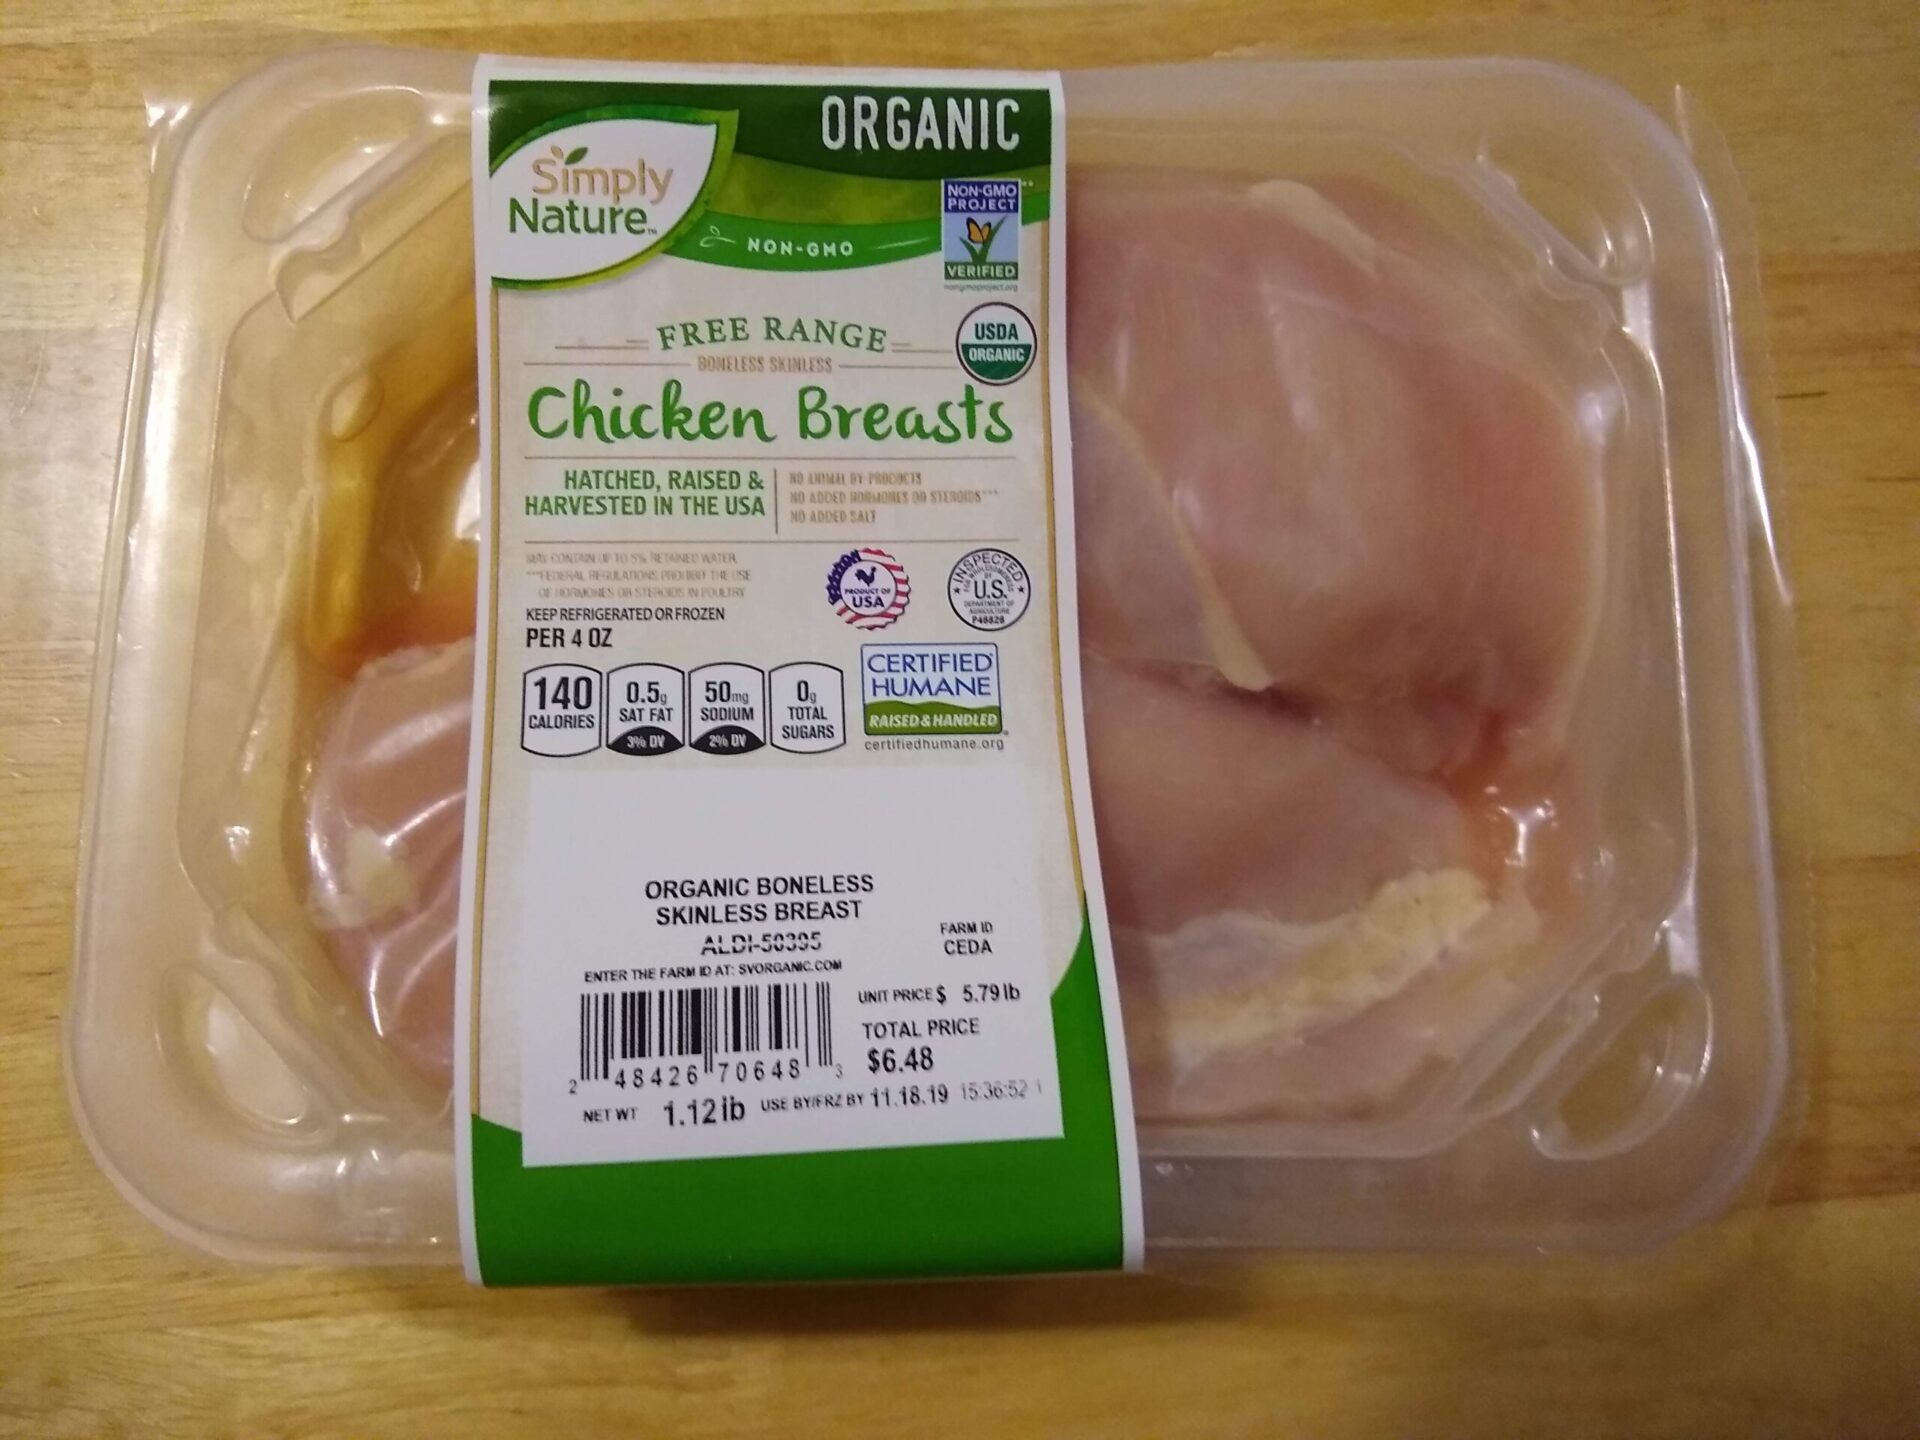 Simply Nature Organic Free Range Chicken Breasts